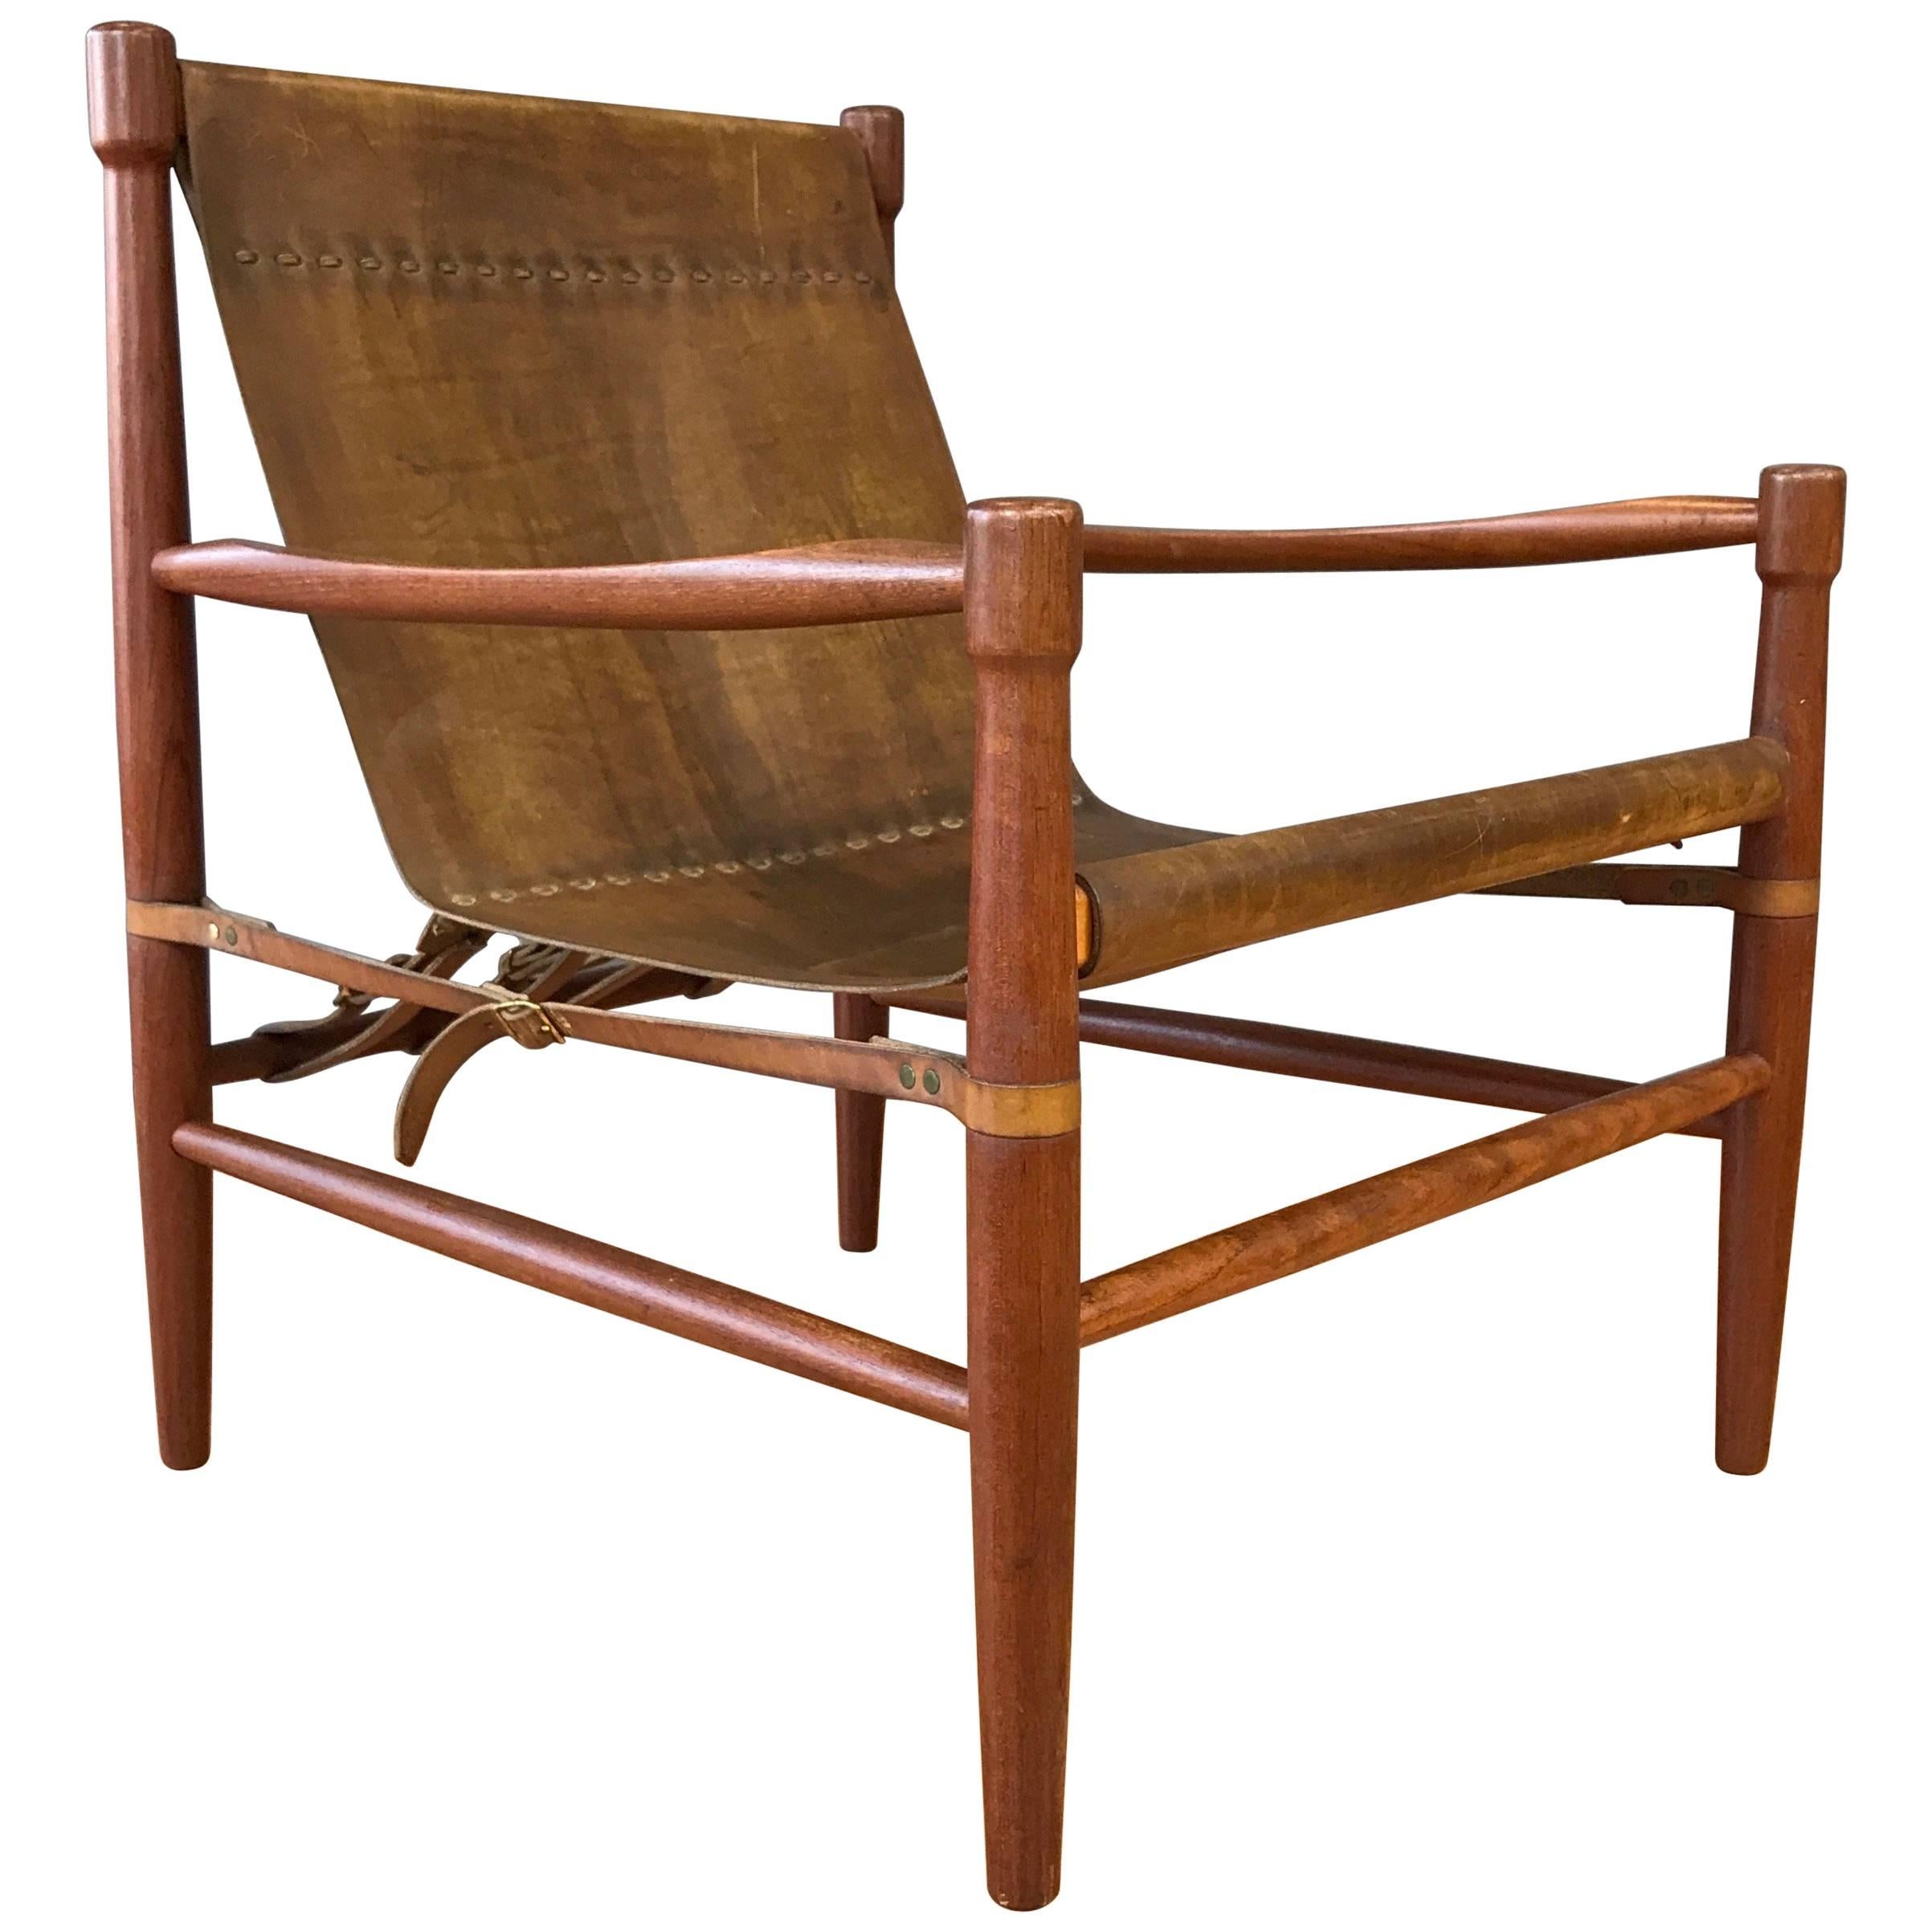 Uncommon Kaare Klint-Style Danish Teak and Leather Safari Chair